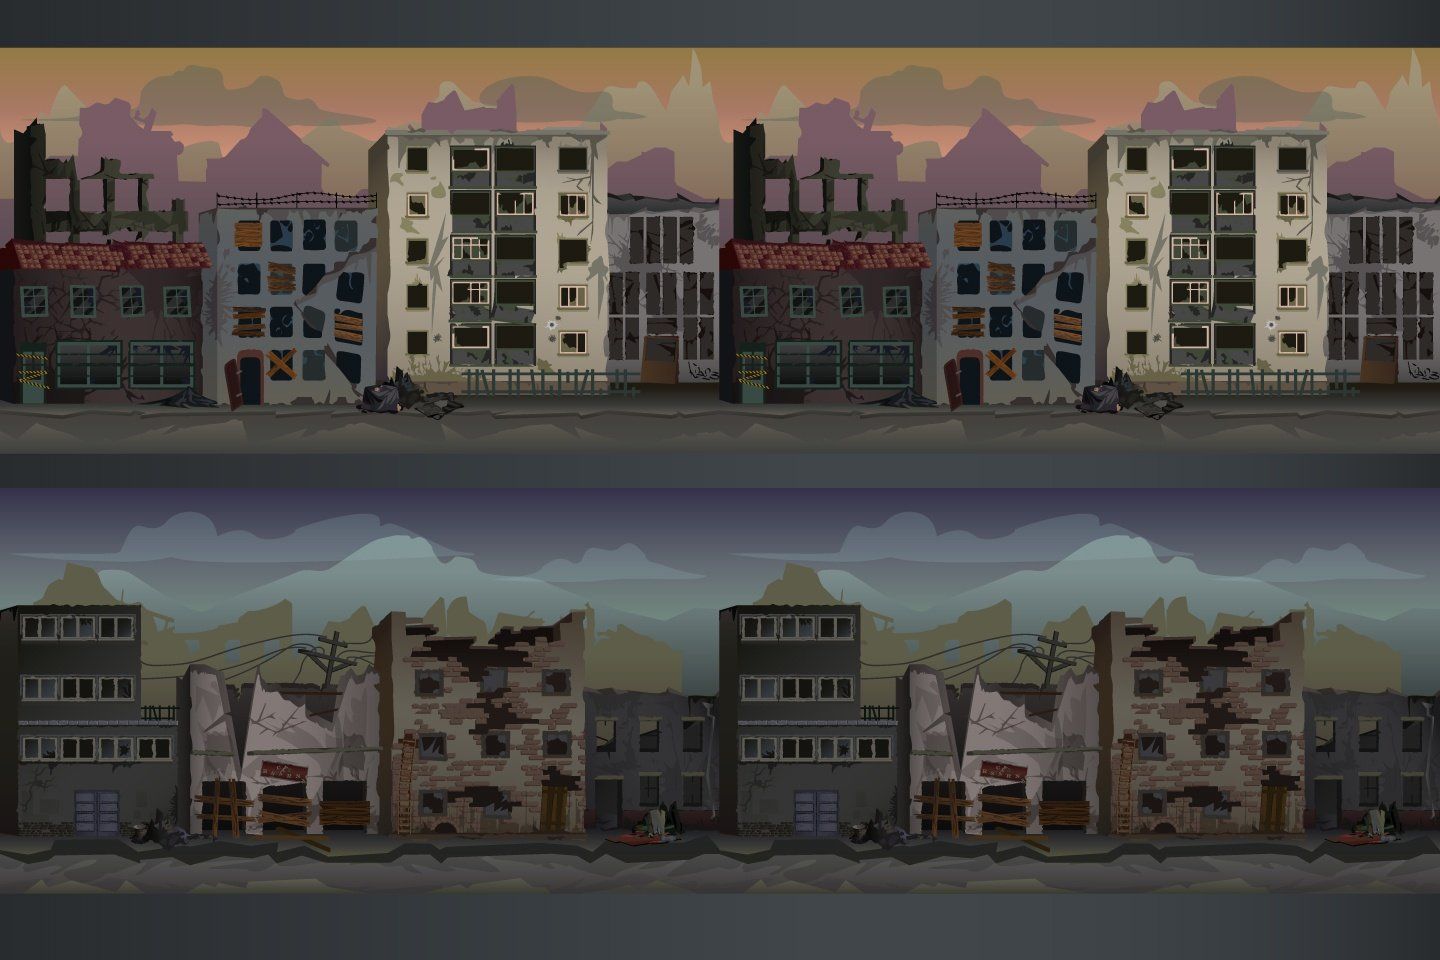 Zombie City Background